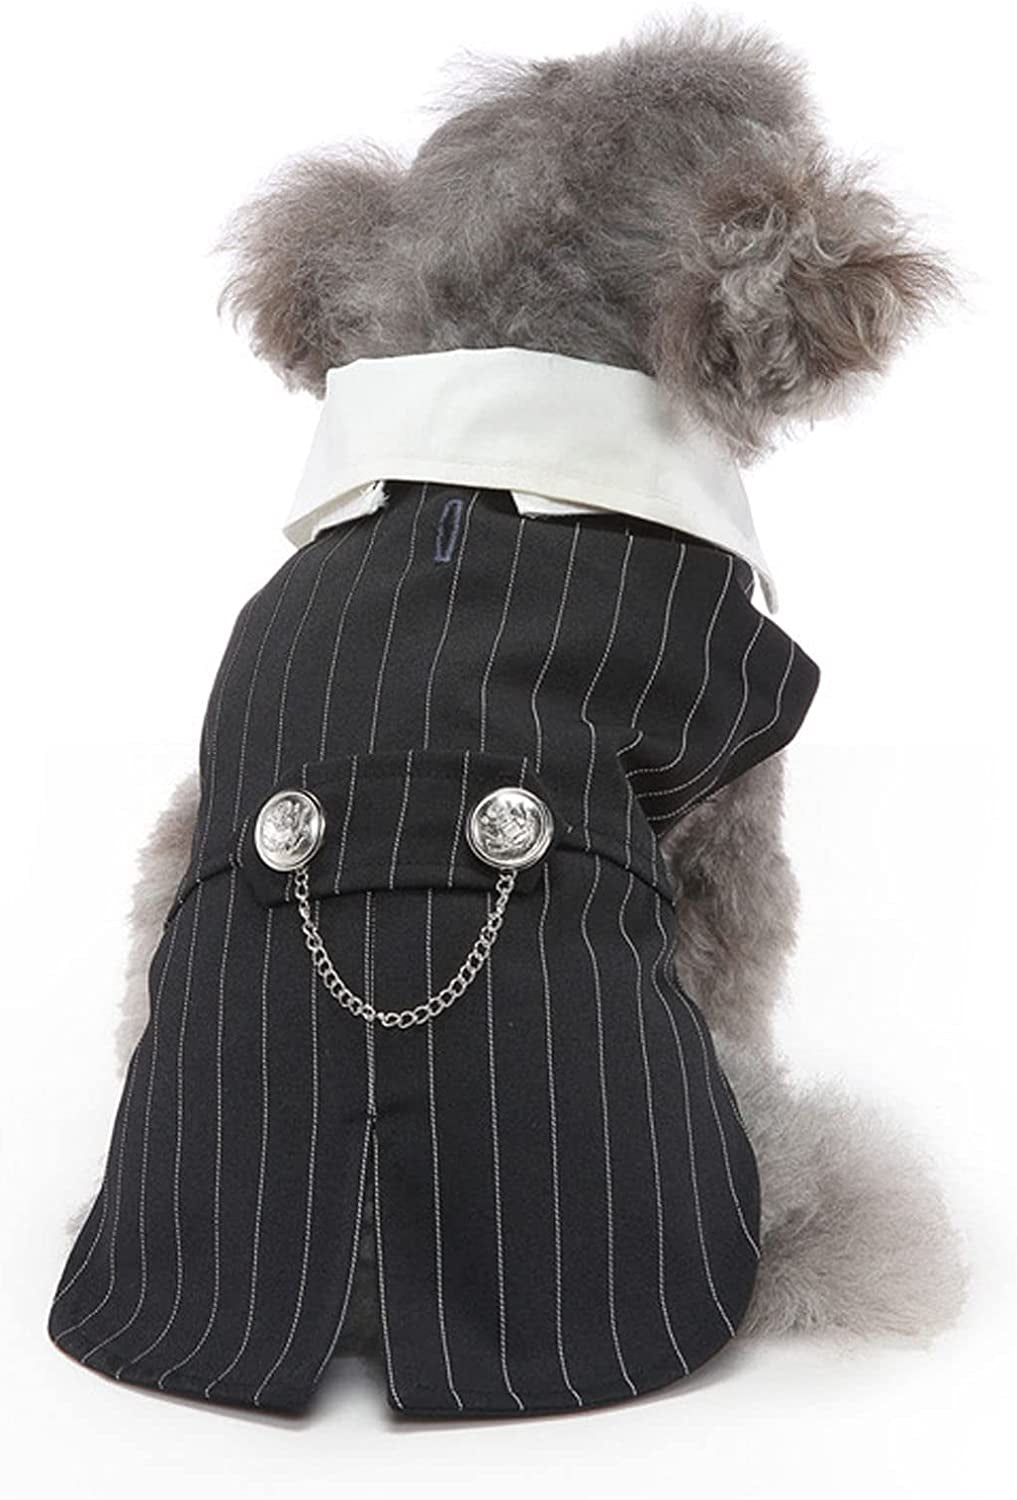 Pet Wedding Suit, Cute Stylish Vertical Stripe Breathing Dog Tuxedo Costume for Halloween Birthday Party (M) Animals & Pet Supplies > Pet Supplies > Dog Supplies > Dog Apparel LEYT   